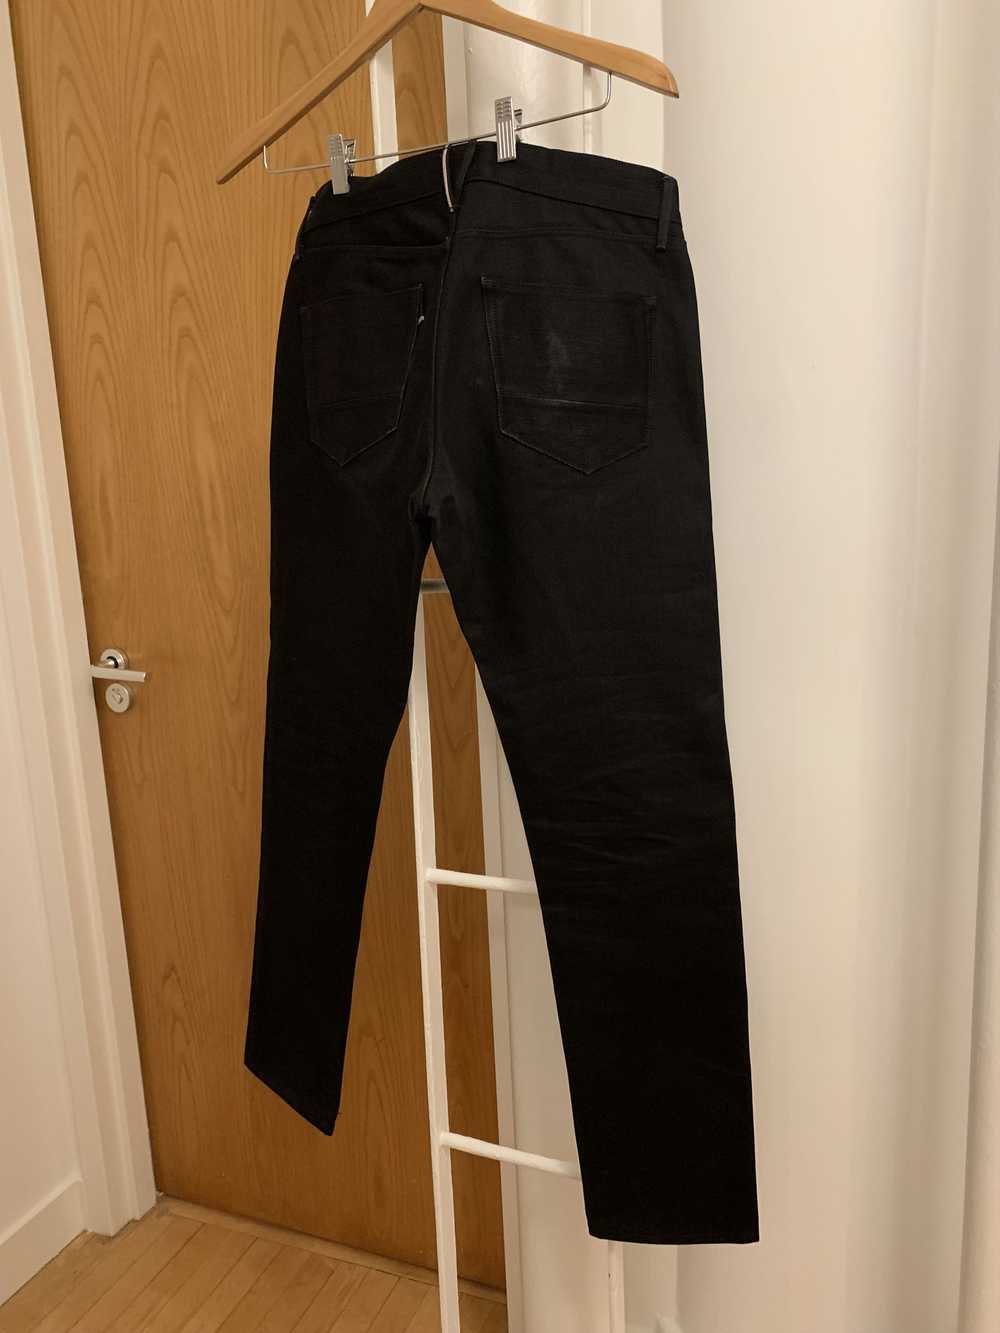 3 X 1 3x1 NYC Black Jeans - image 5